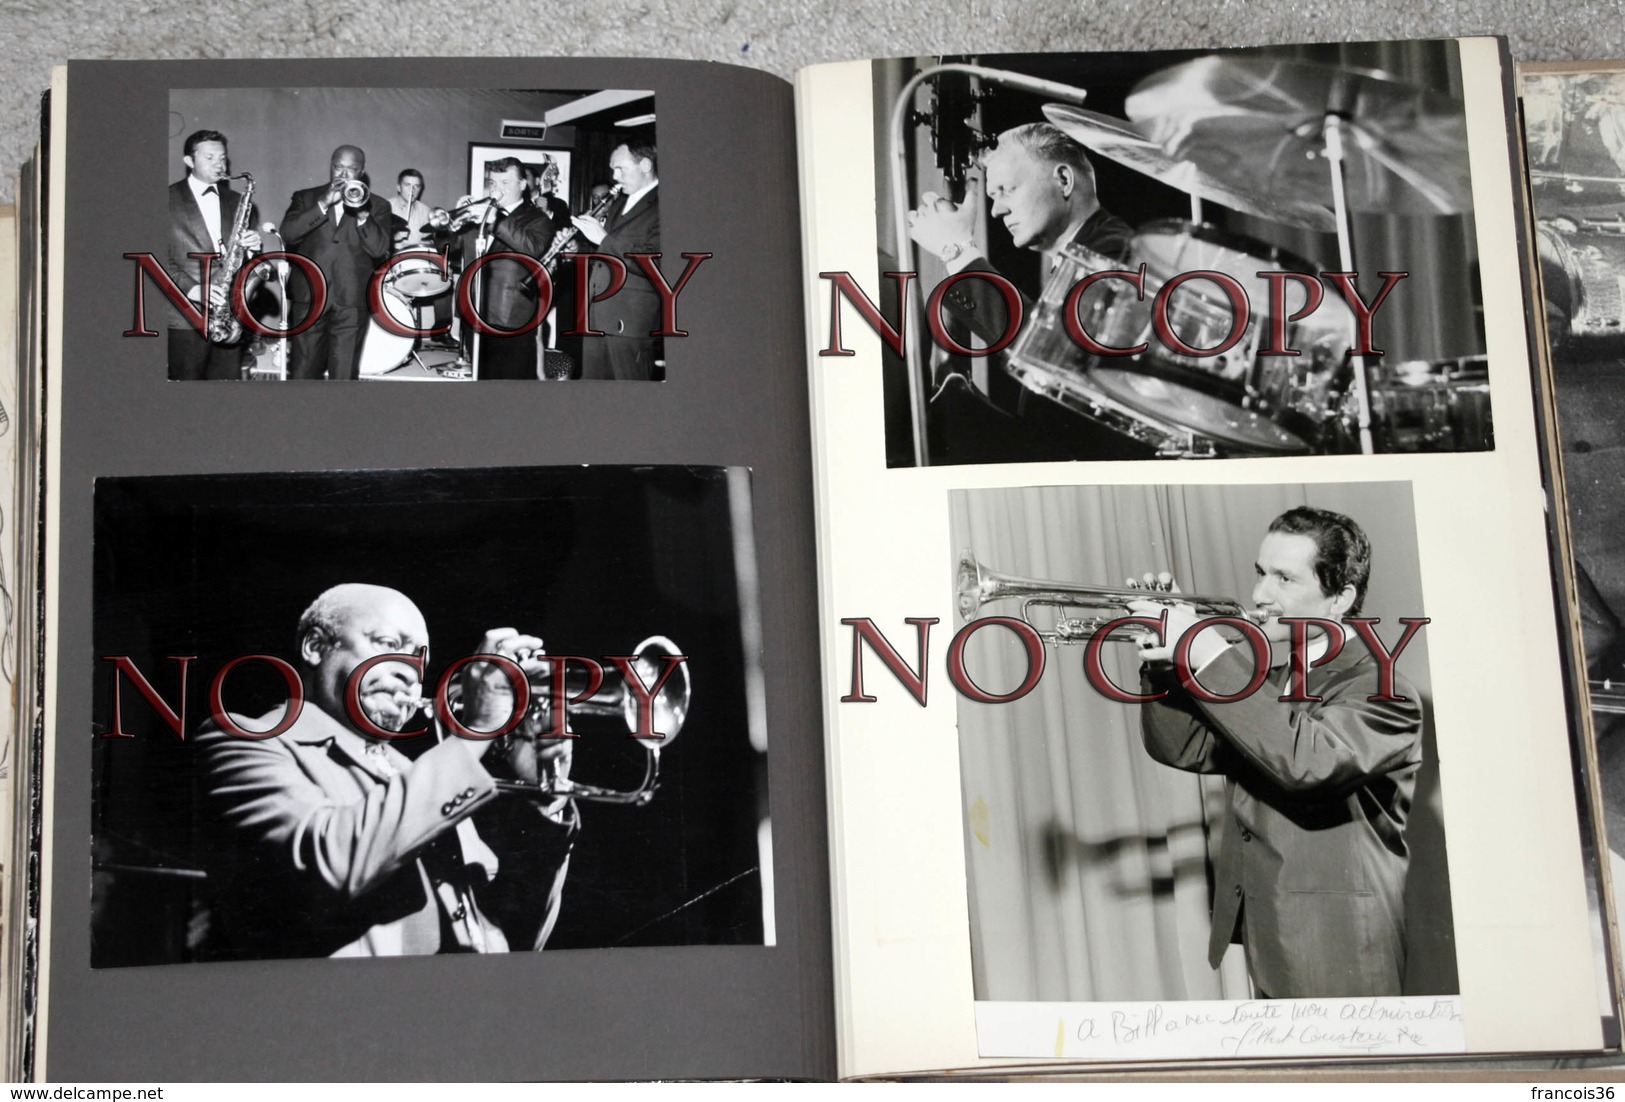 ALBUM de 377 photographies Collection privée de Bill Coleman avec Louis Armstrong Ray Charles - Jazz Swing Blues 50s 60s